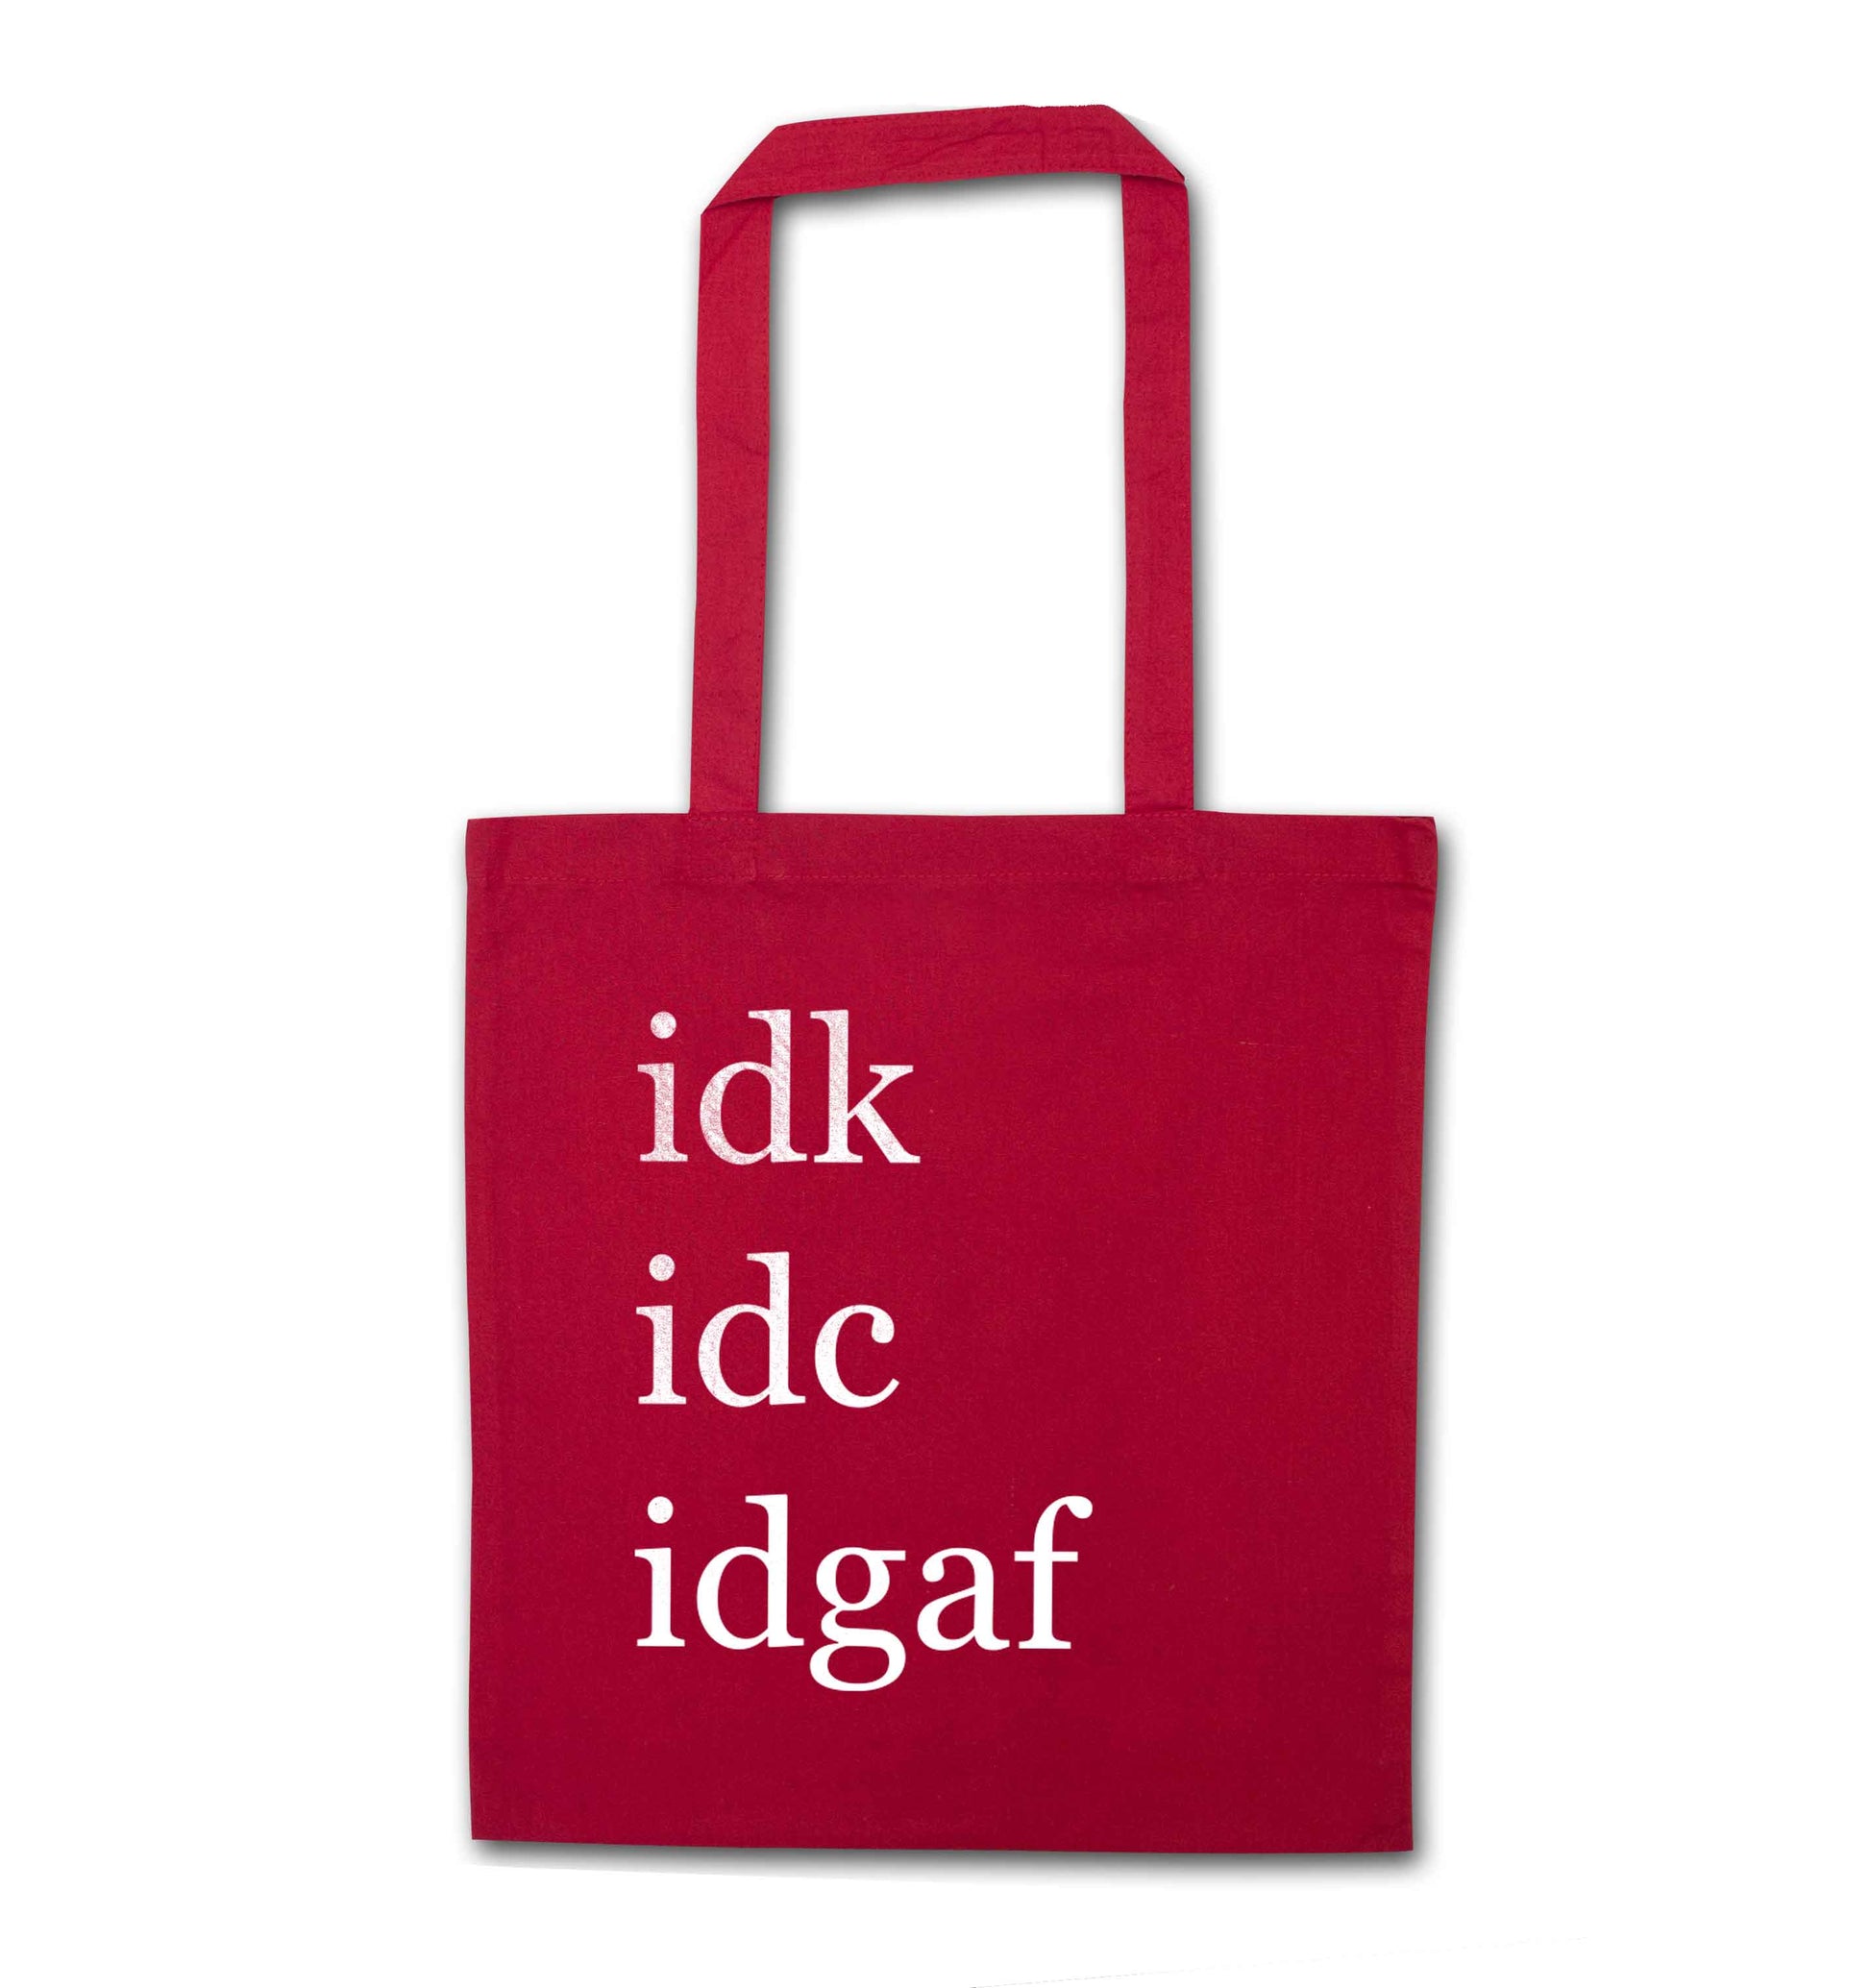 Idk Idc Idgaf red tote bag